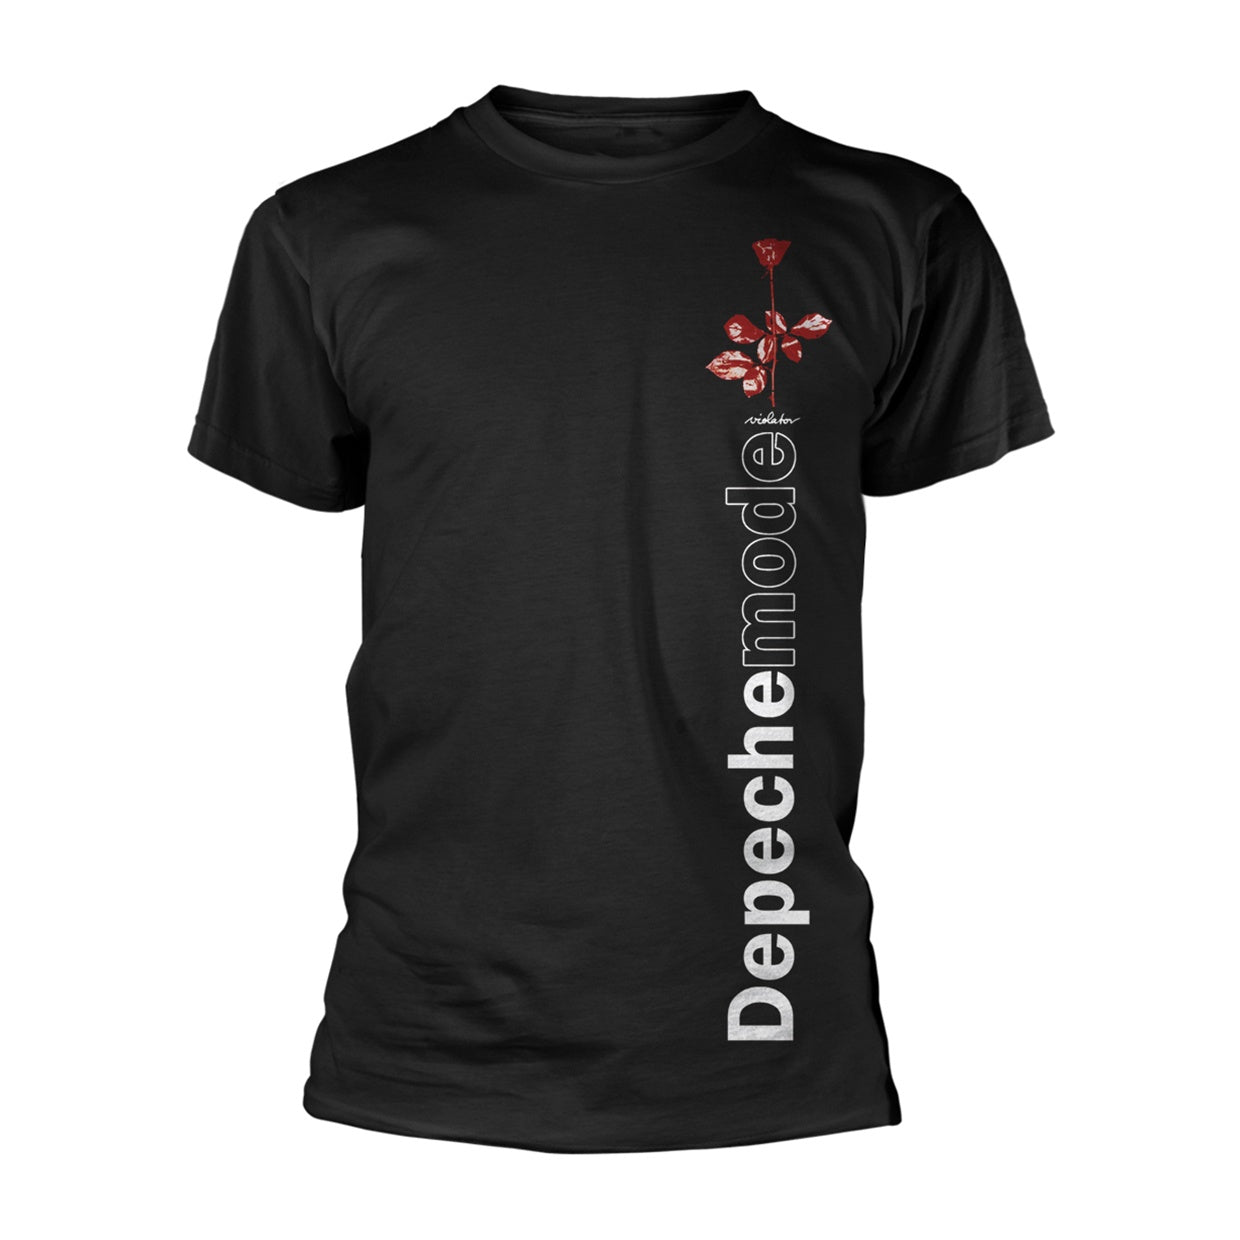 DEPECHE MODE - Violator Side Rose T-Shirt